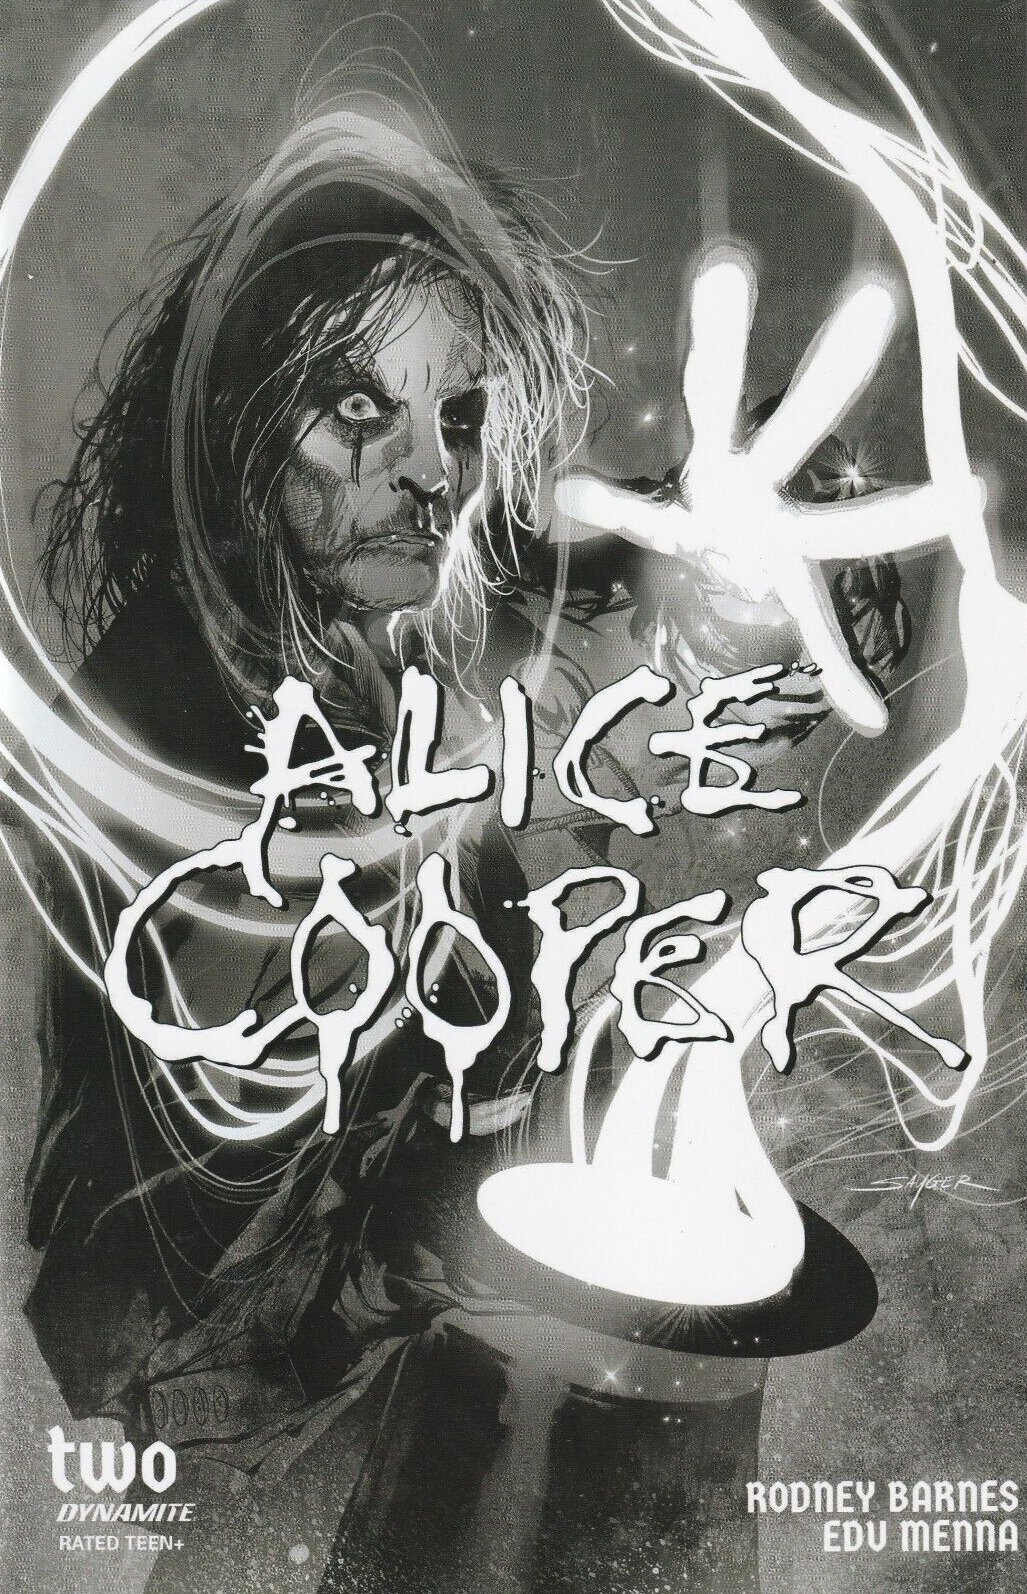 Alice Cooper 2